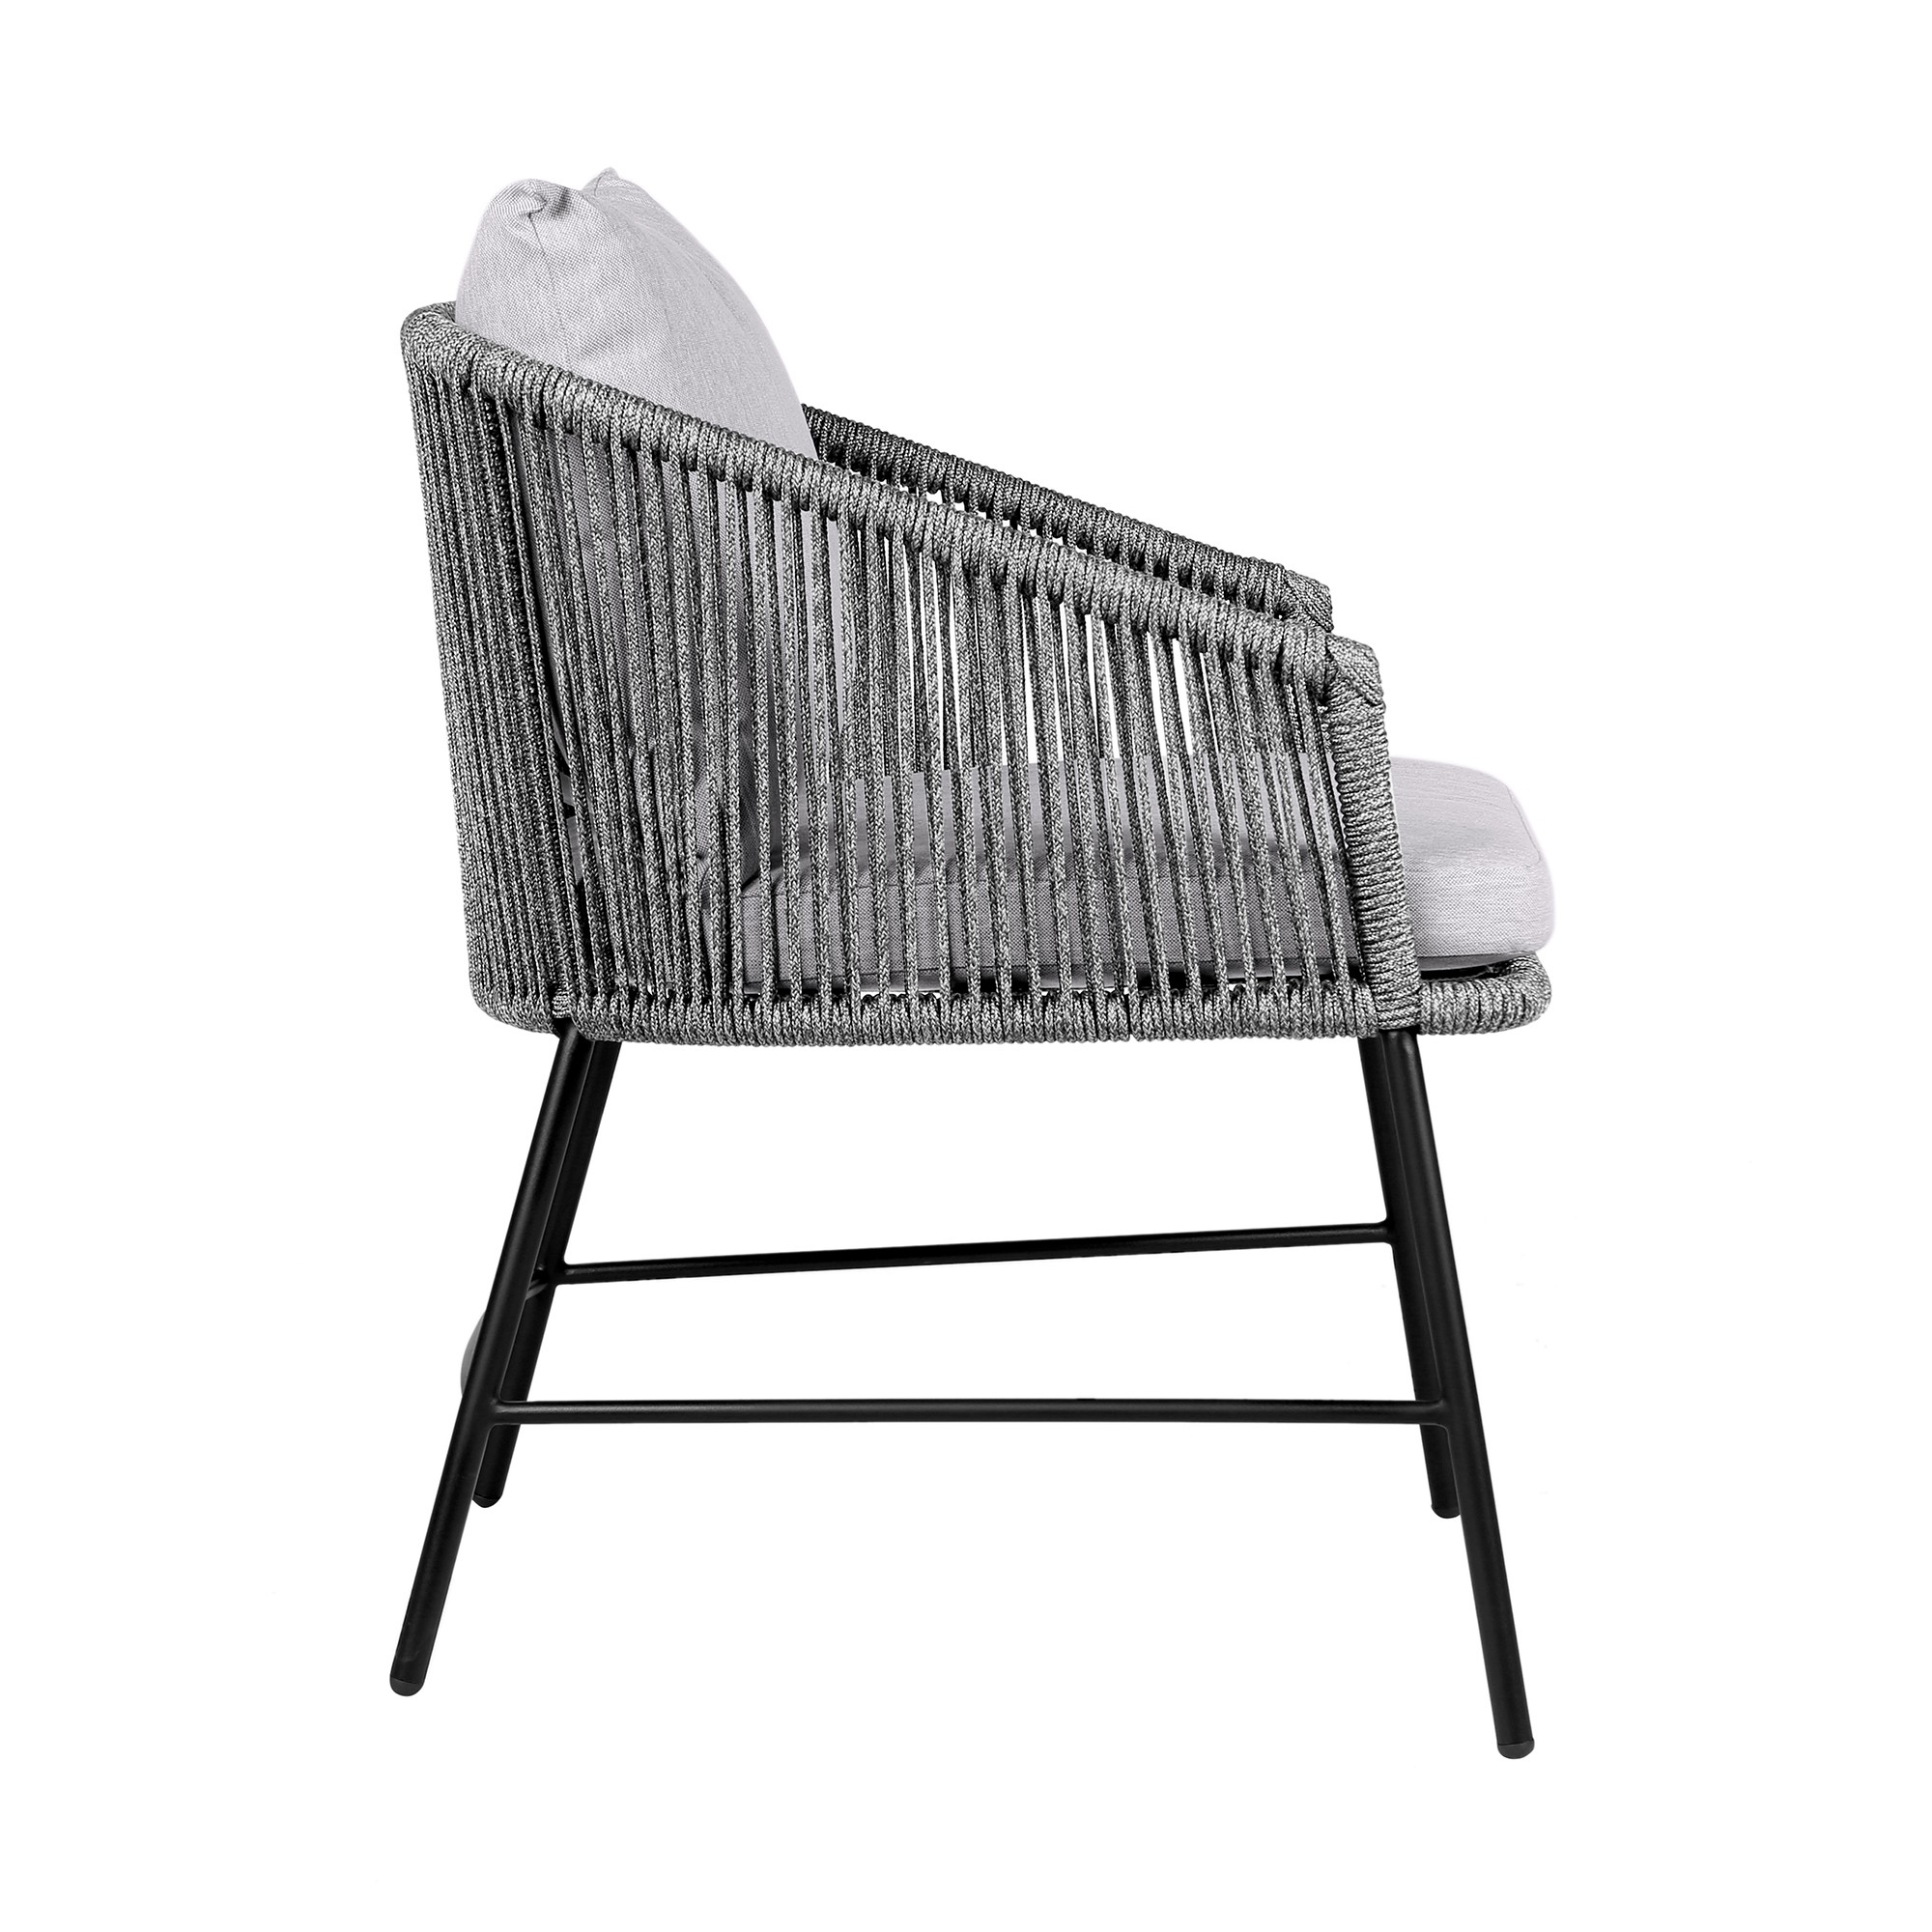 25 Inch Patio Dining Chair, Matte Black Steel Frame, Gray Rope Woven Seat- Saltoro Sherpi